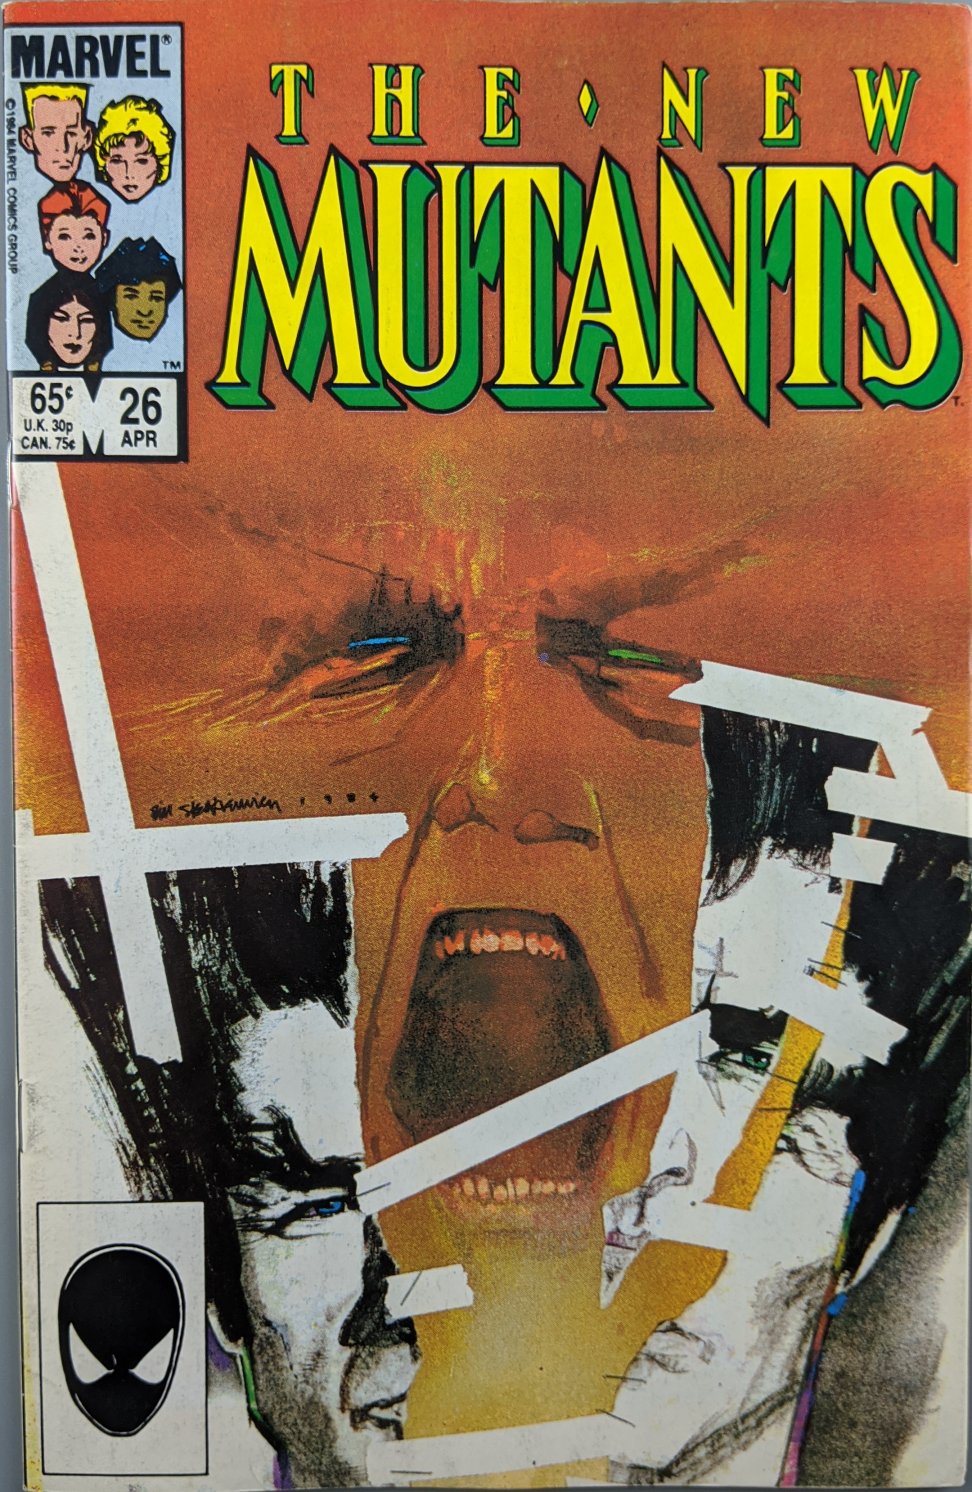 The New Mutants #26 Comic Book Cover Art by Bill Sienkiewicz